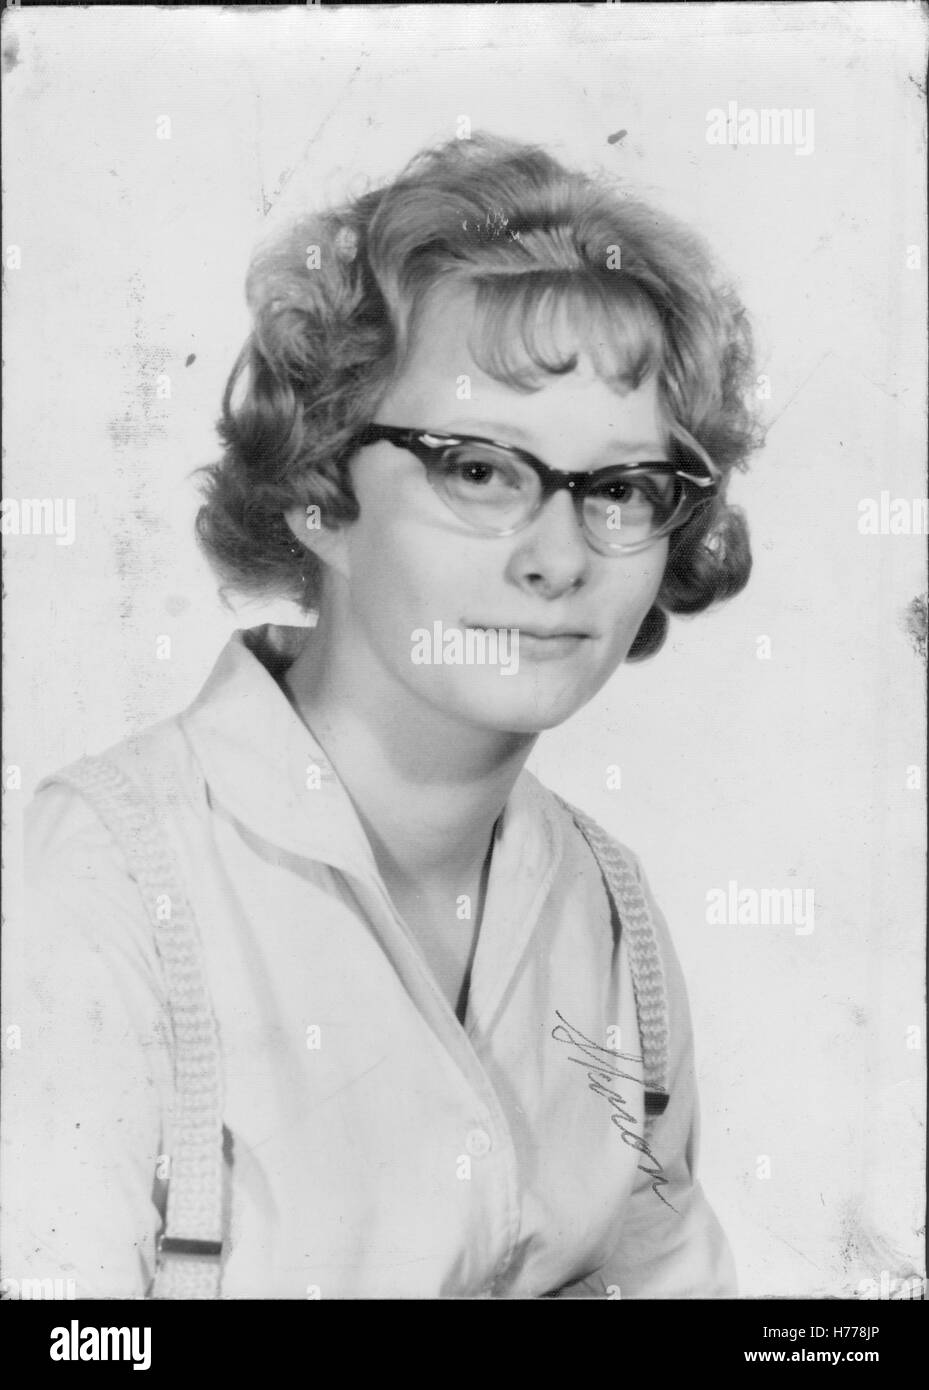 Vintage archival photograph taken in 1956 Stock Photo - Alamy